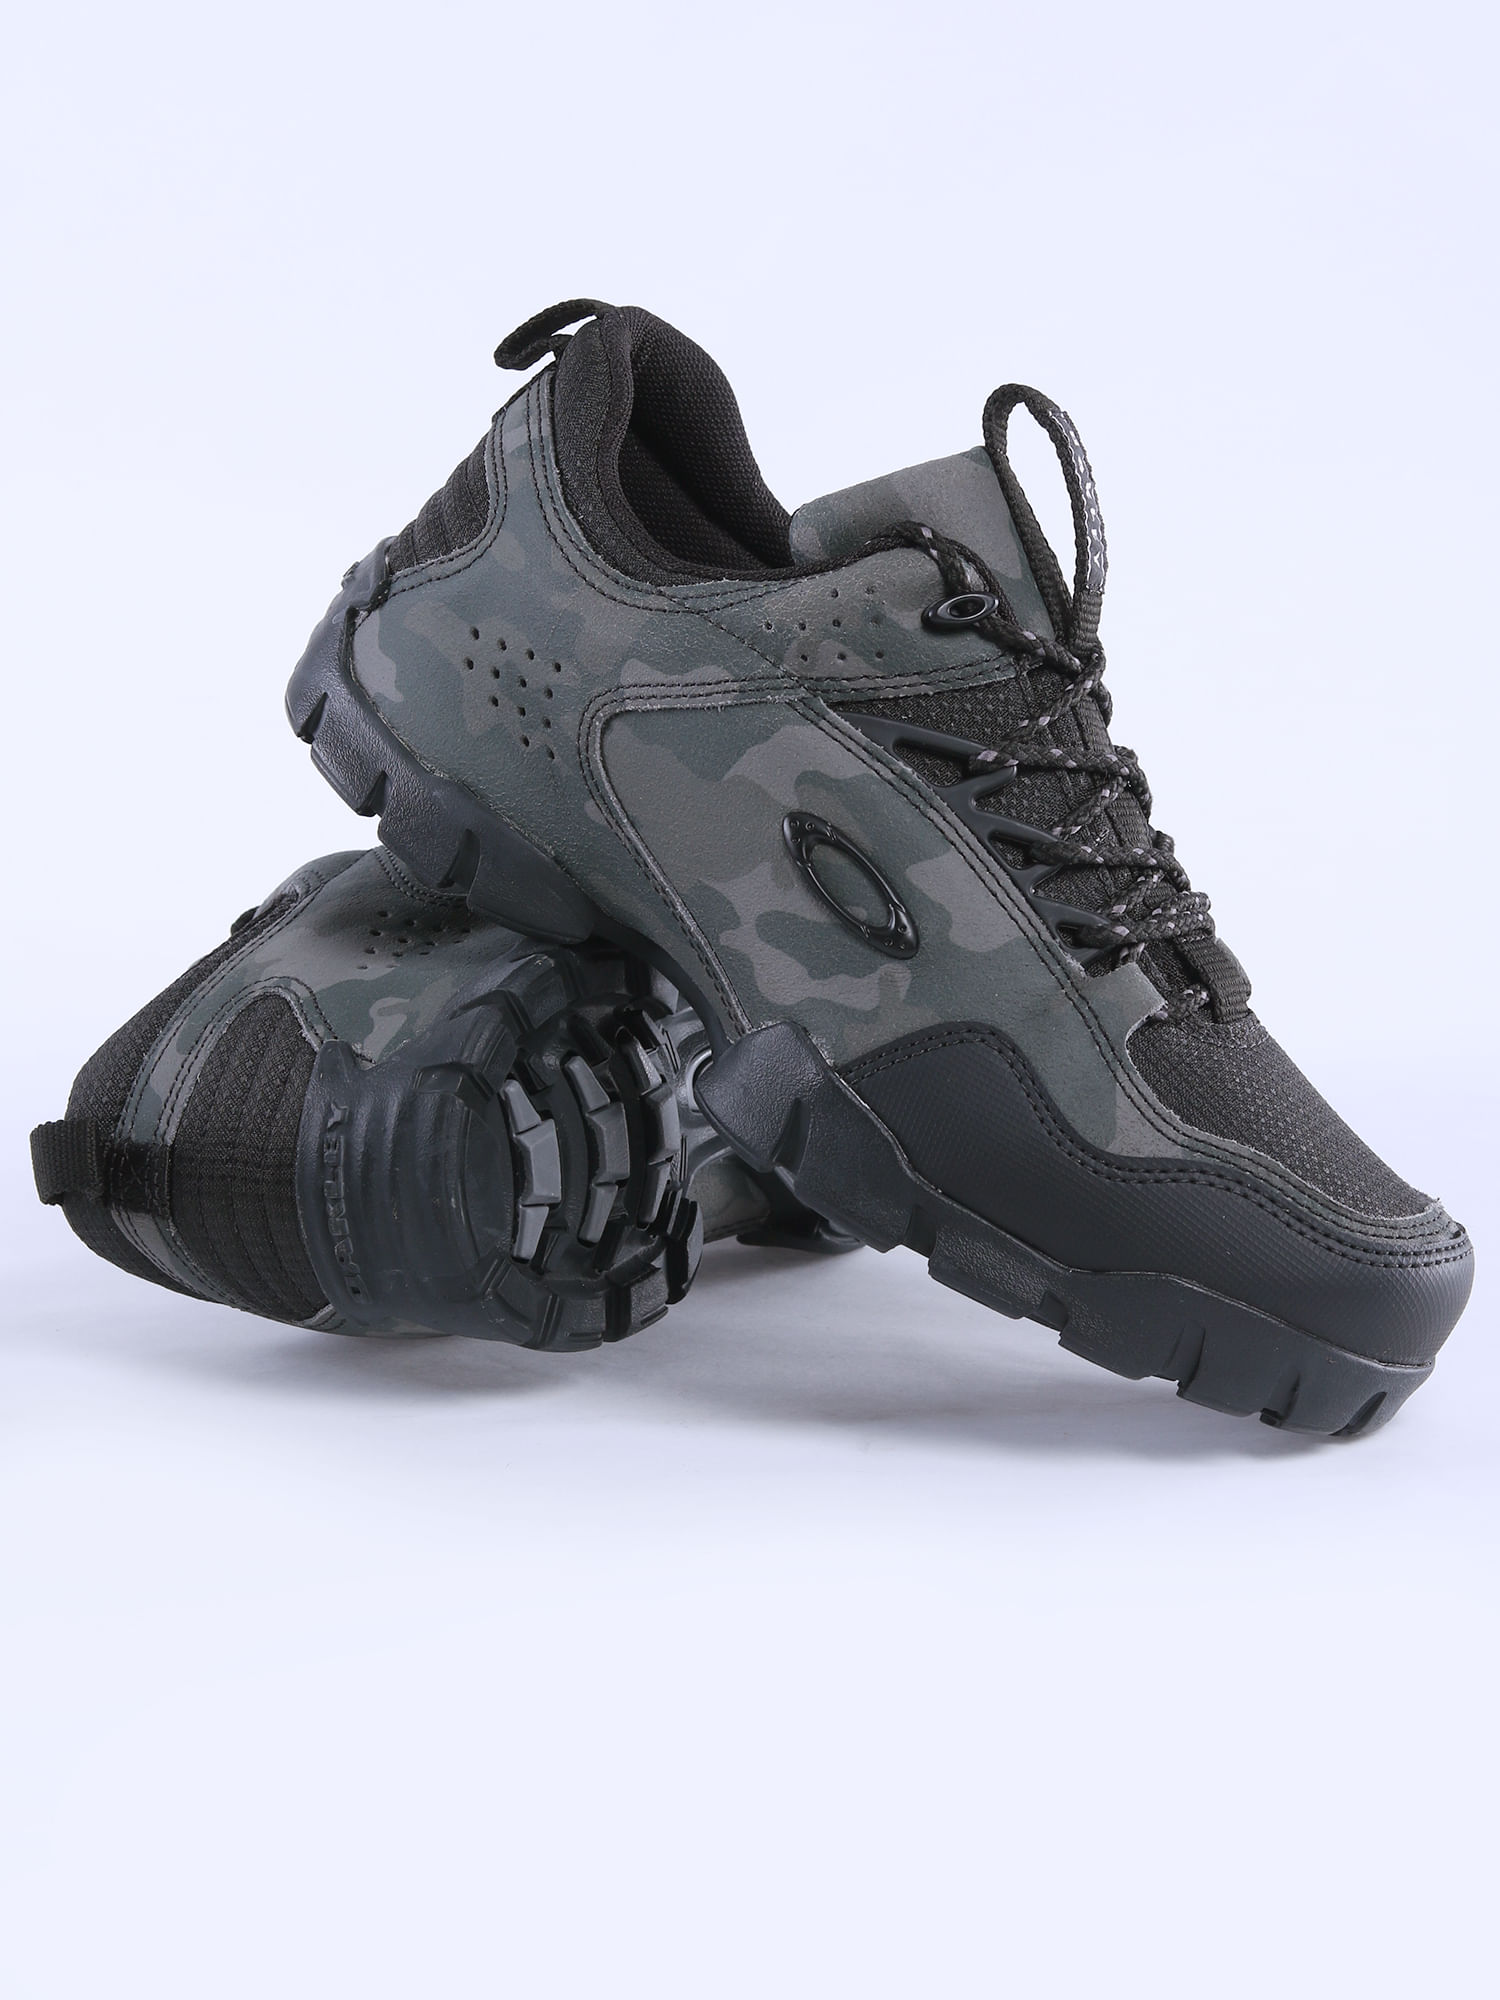 Bota oakley vertex boot - Bali Shoes